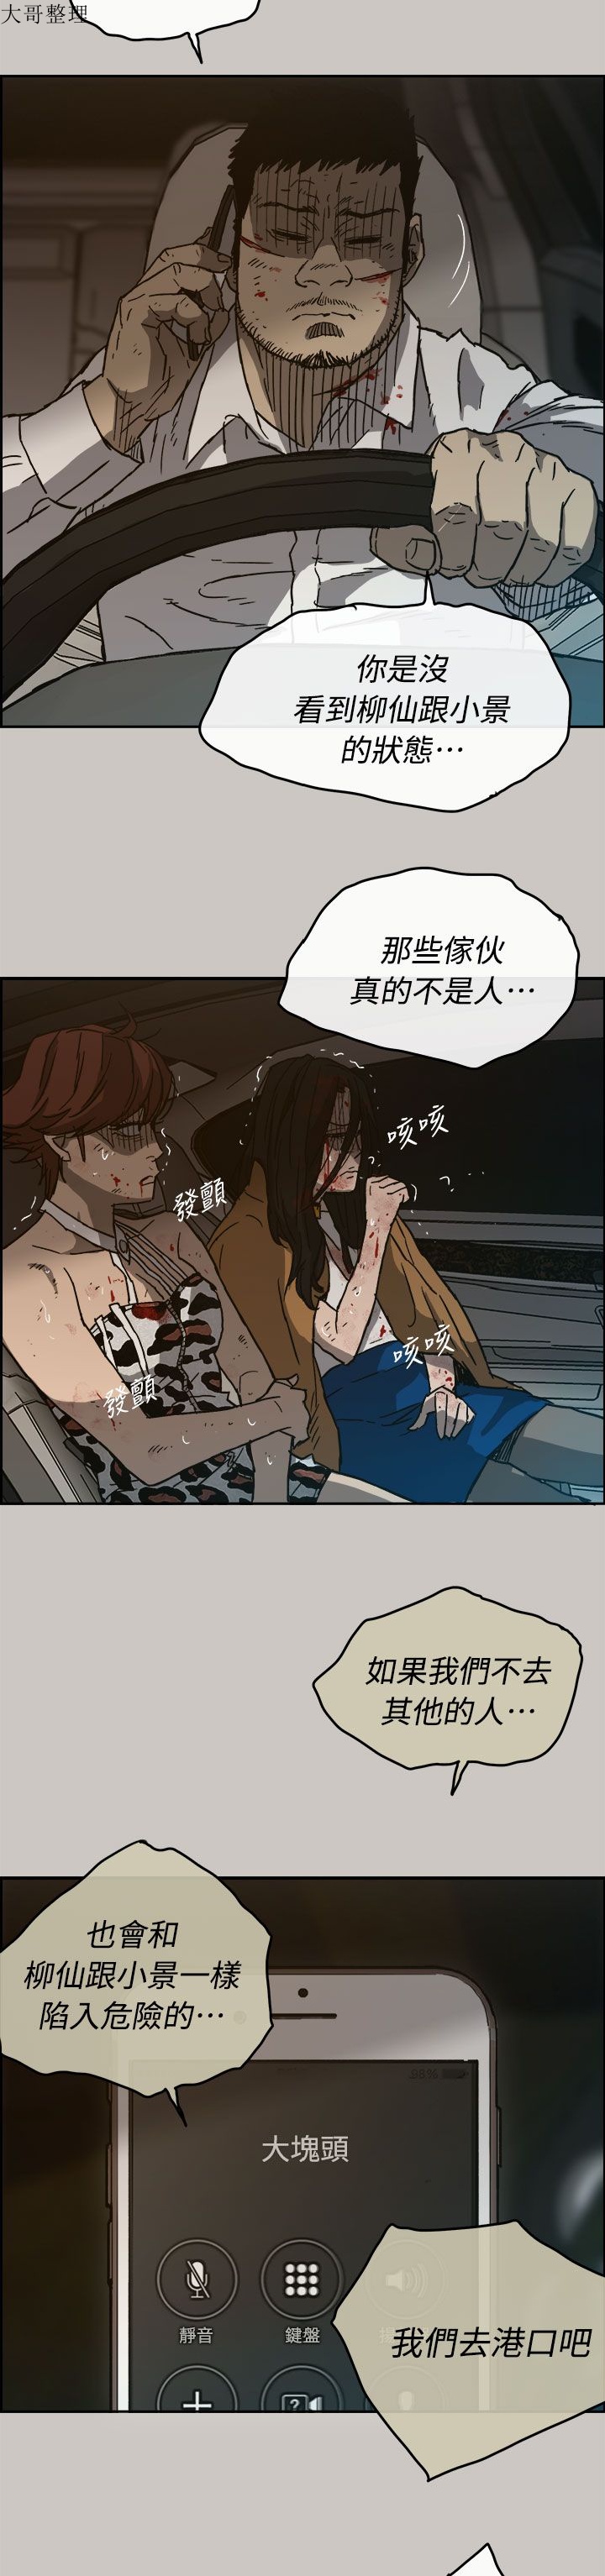 《MAD:小姐与司机》漫画 第35话